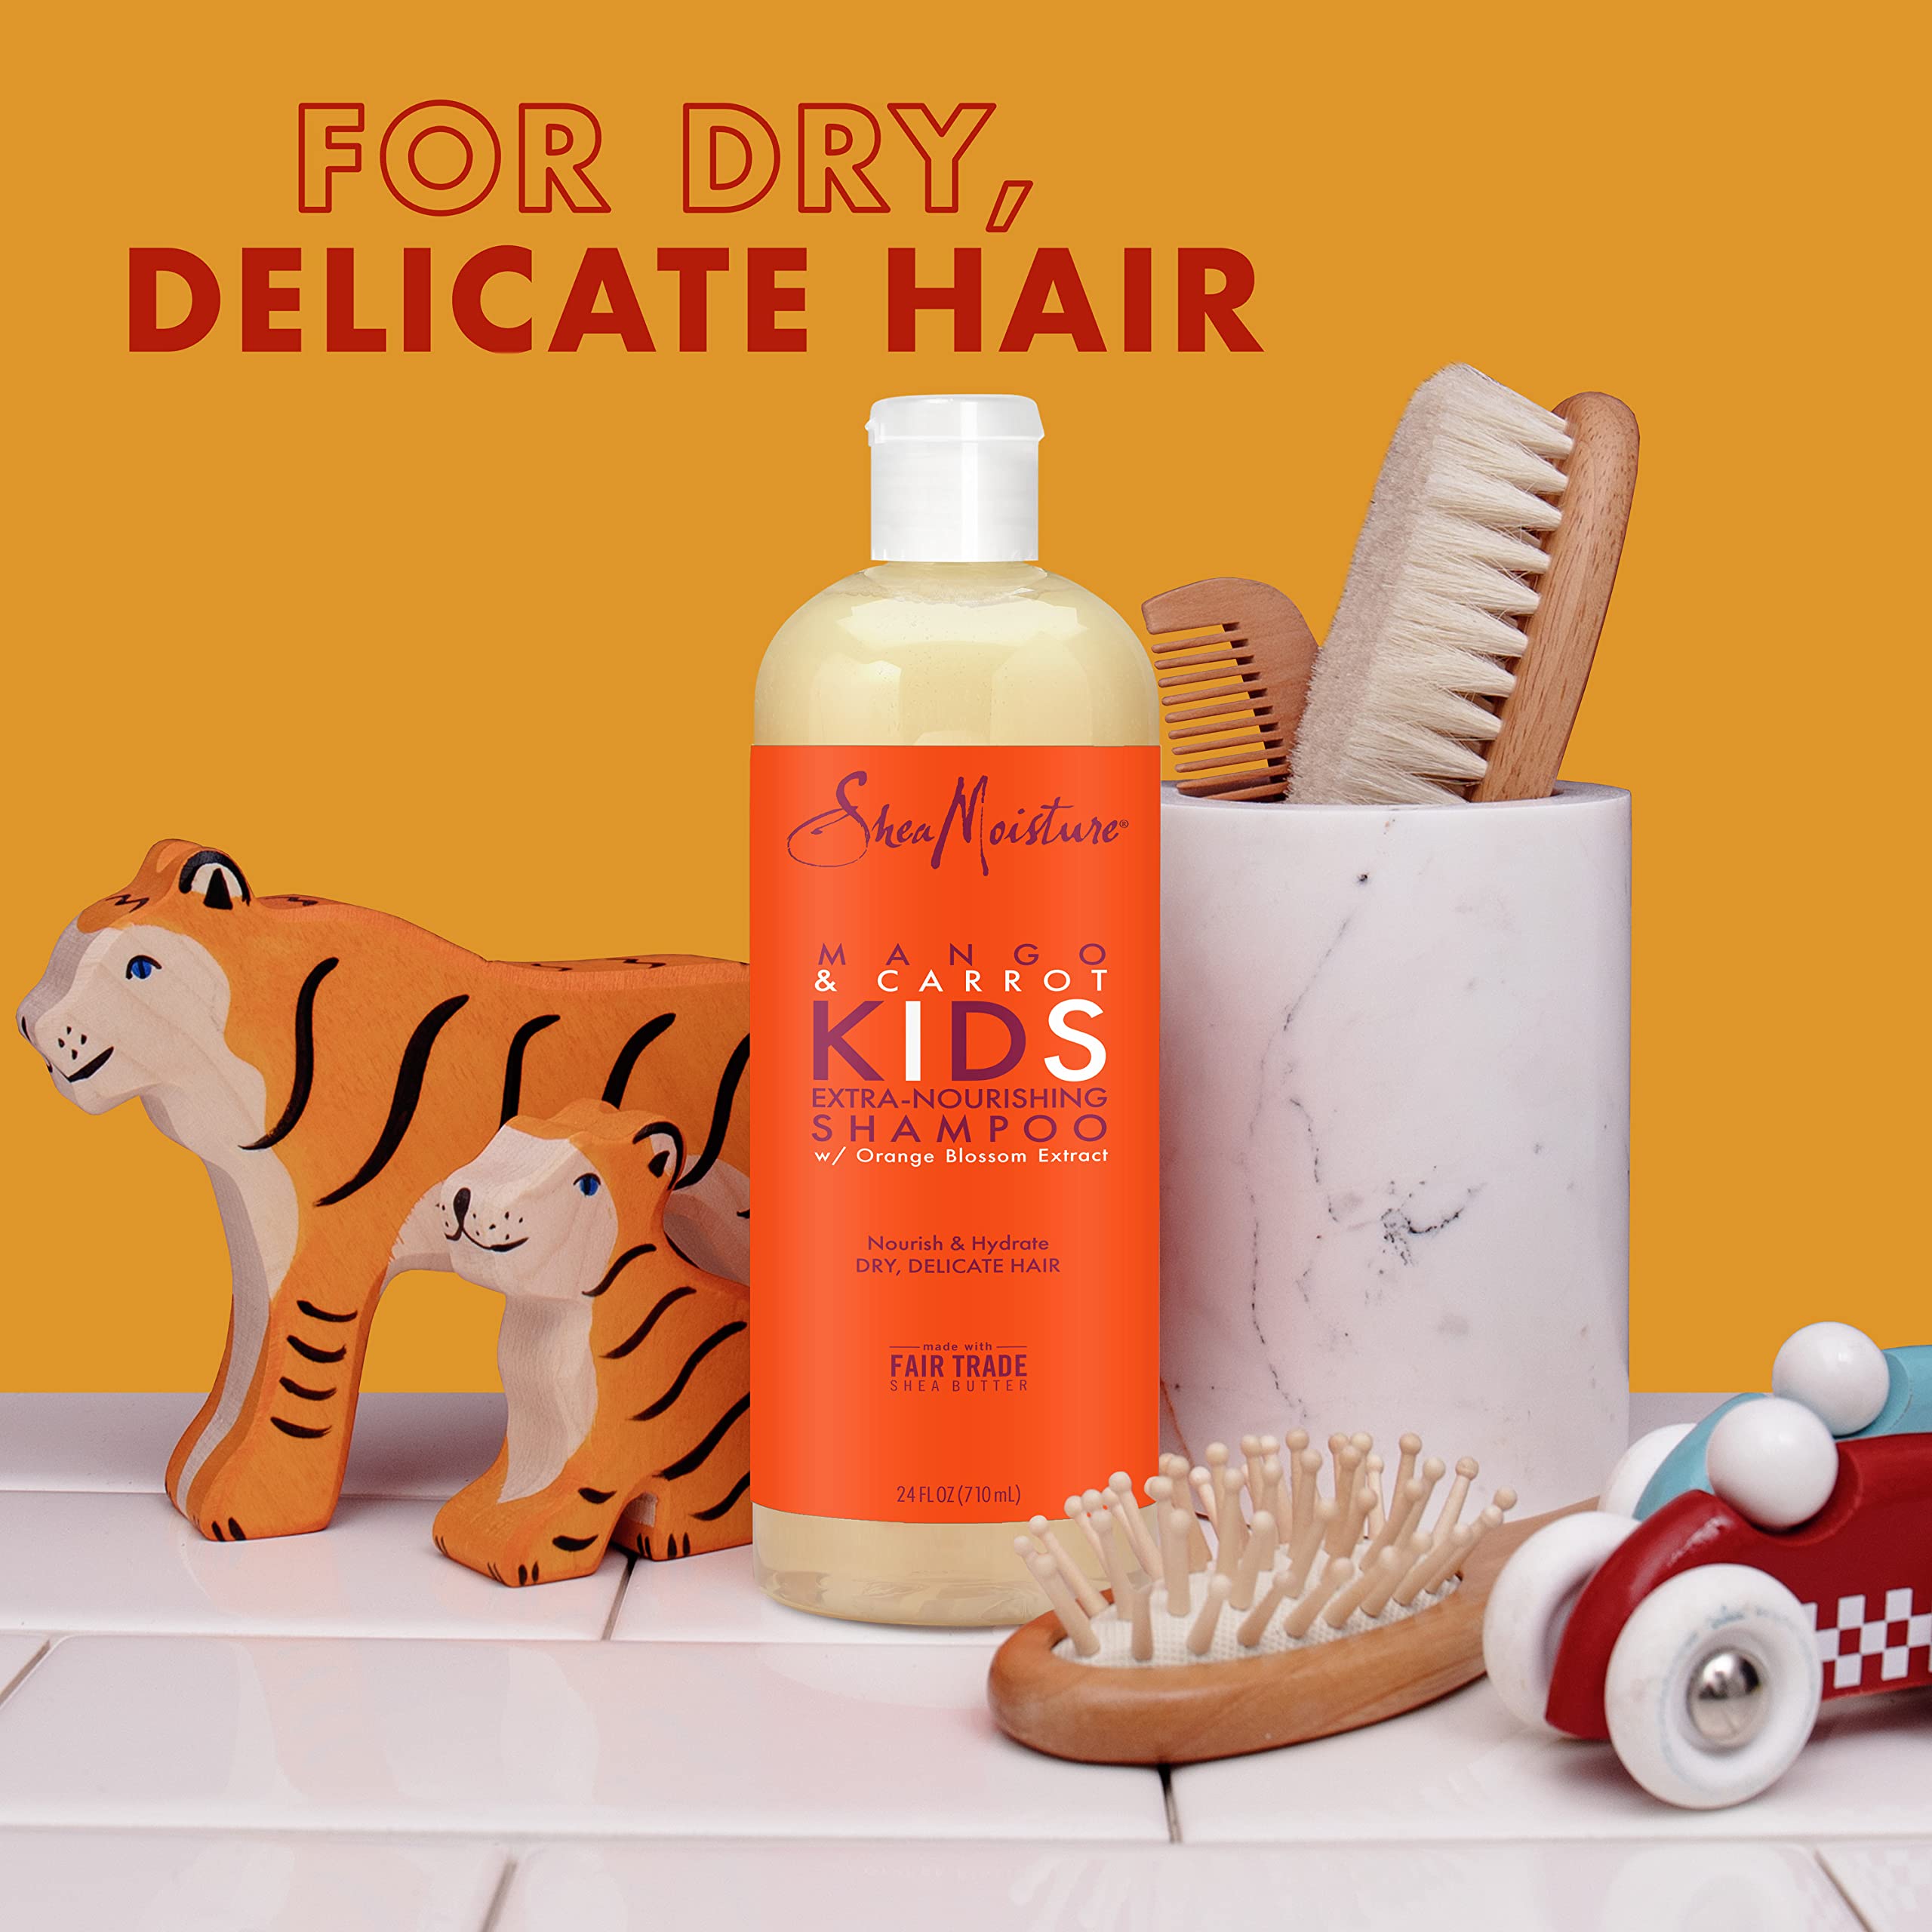 SheaMoisture Kids Shampoo Extra-Nourishing Mango & Carrot For Dry, Delicate Hair 24 fl oz